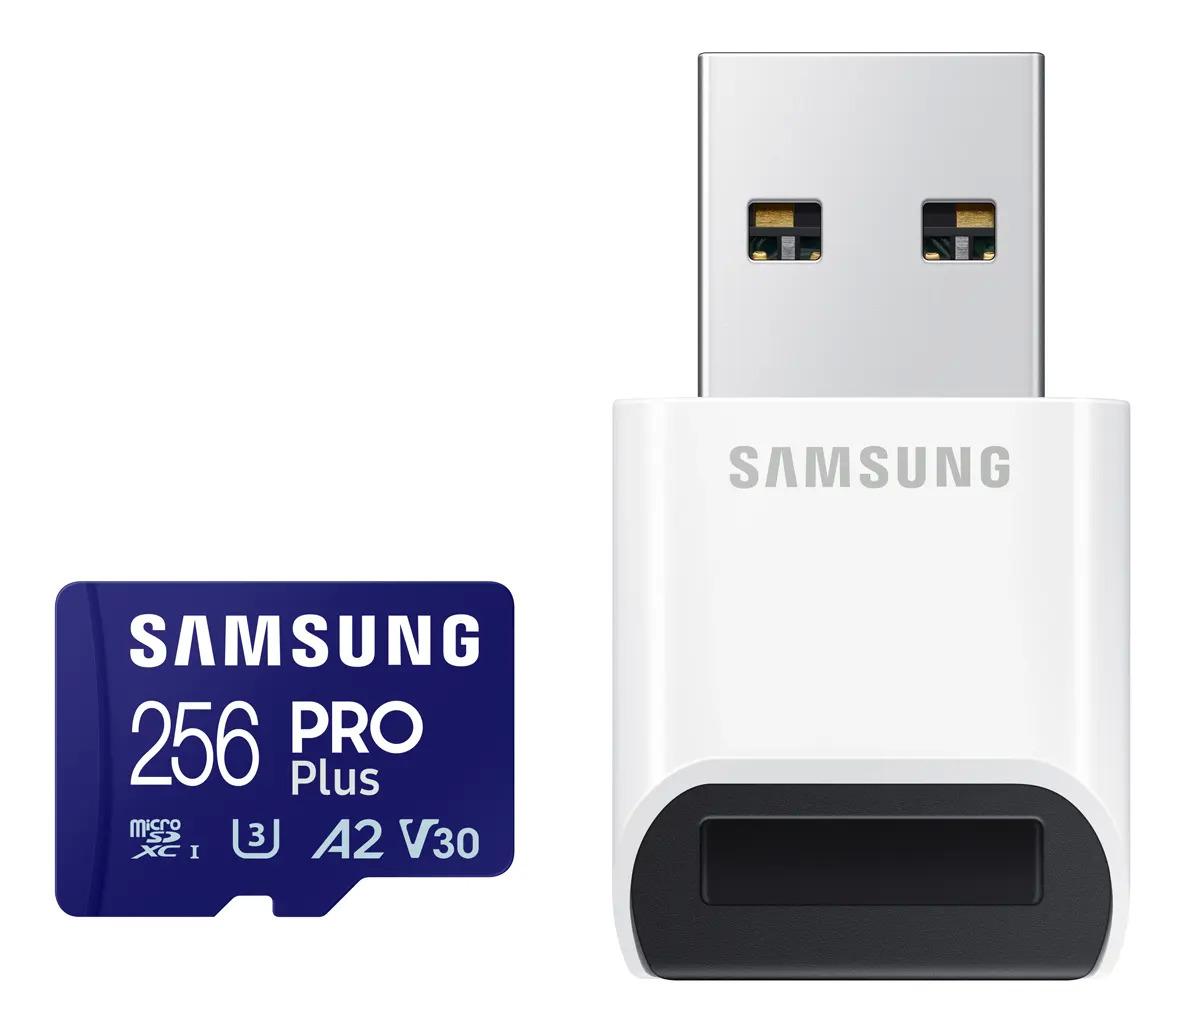 256GB Samsung PRO Plus A2 V30 microSDXC UHS-I Memory Card for $19.99 Shipped